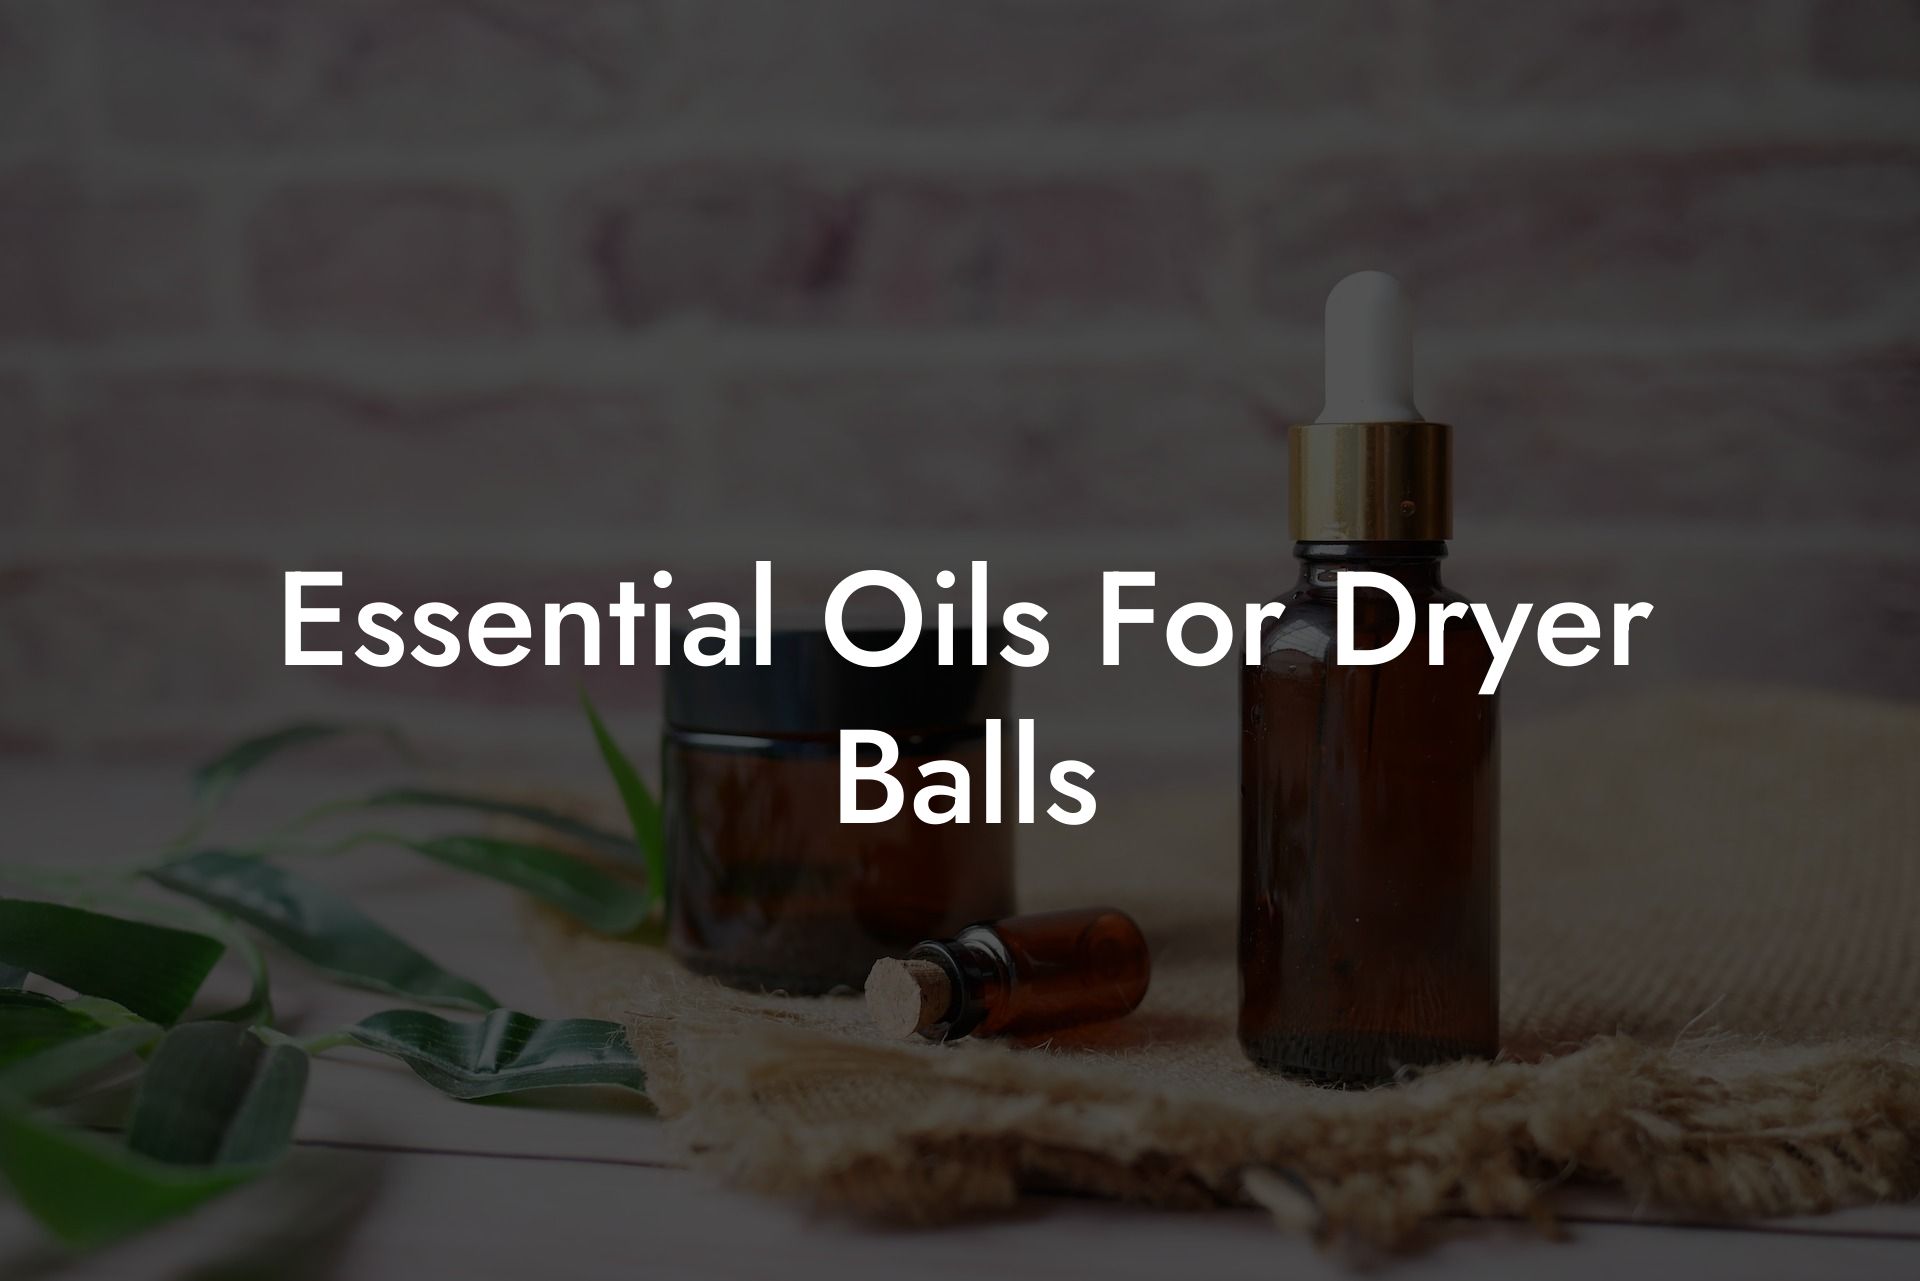 Essential Oils For Dryer Balls